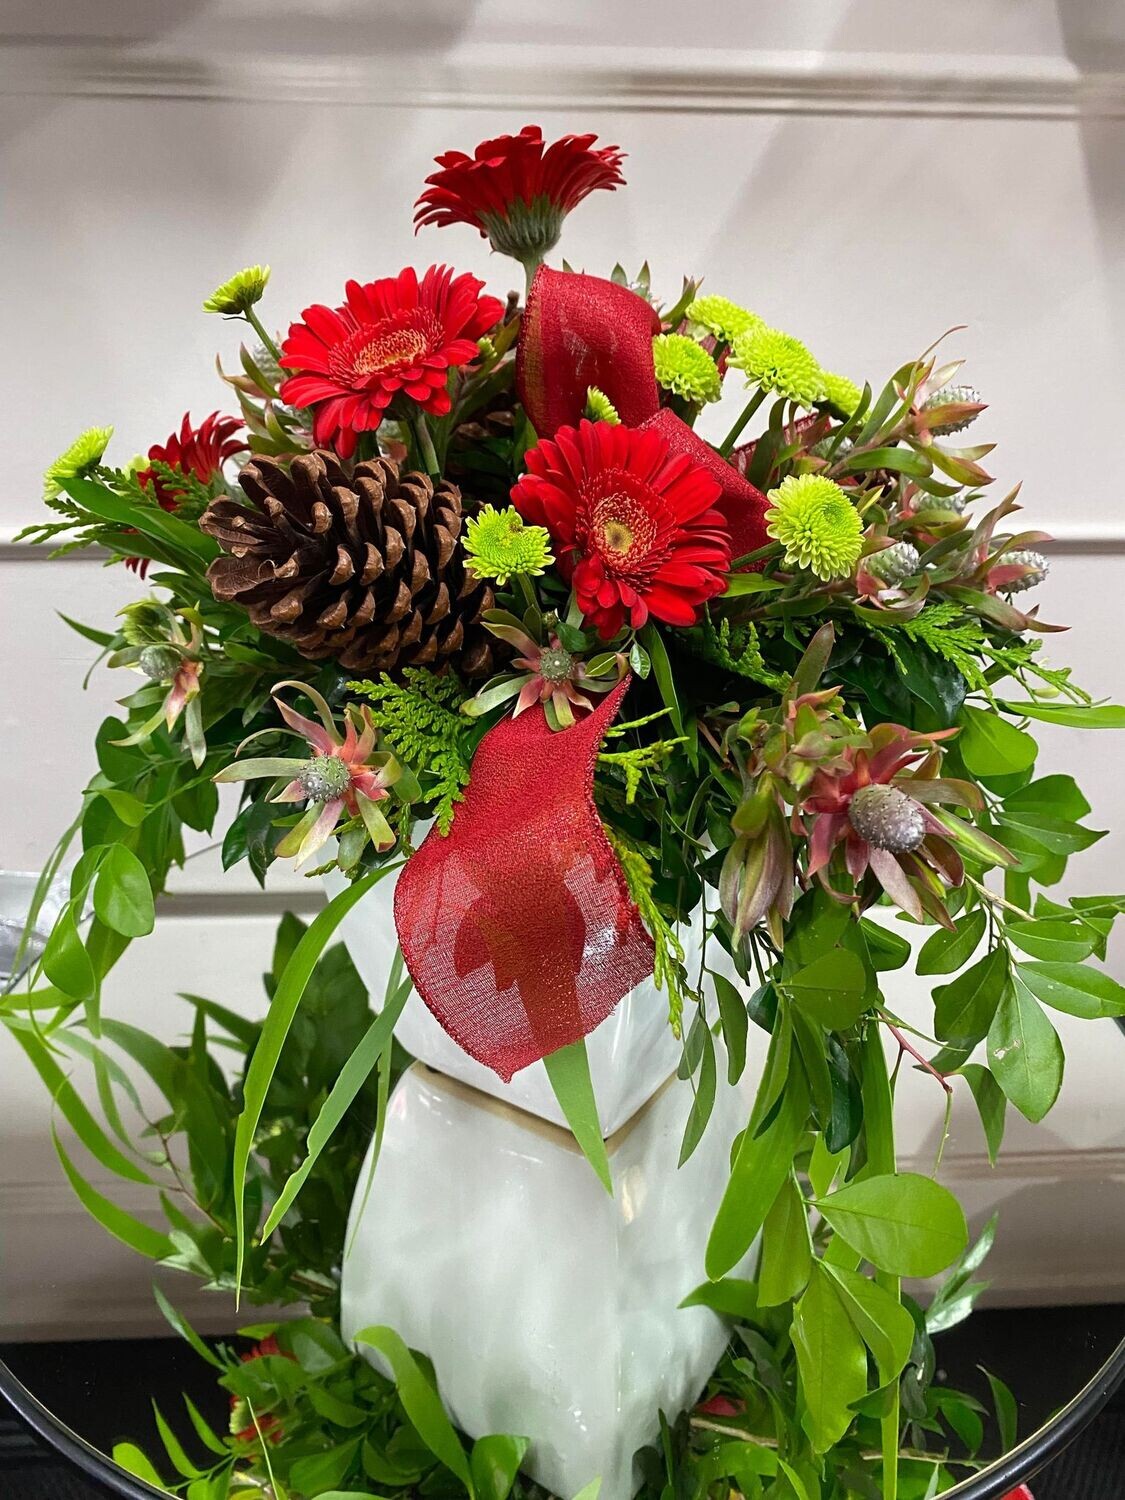 Festive Flowers In Ceramic Vase